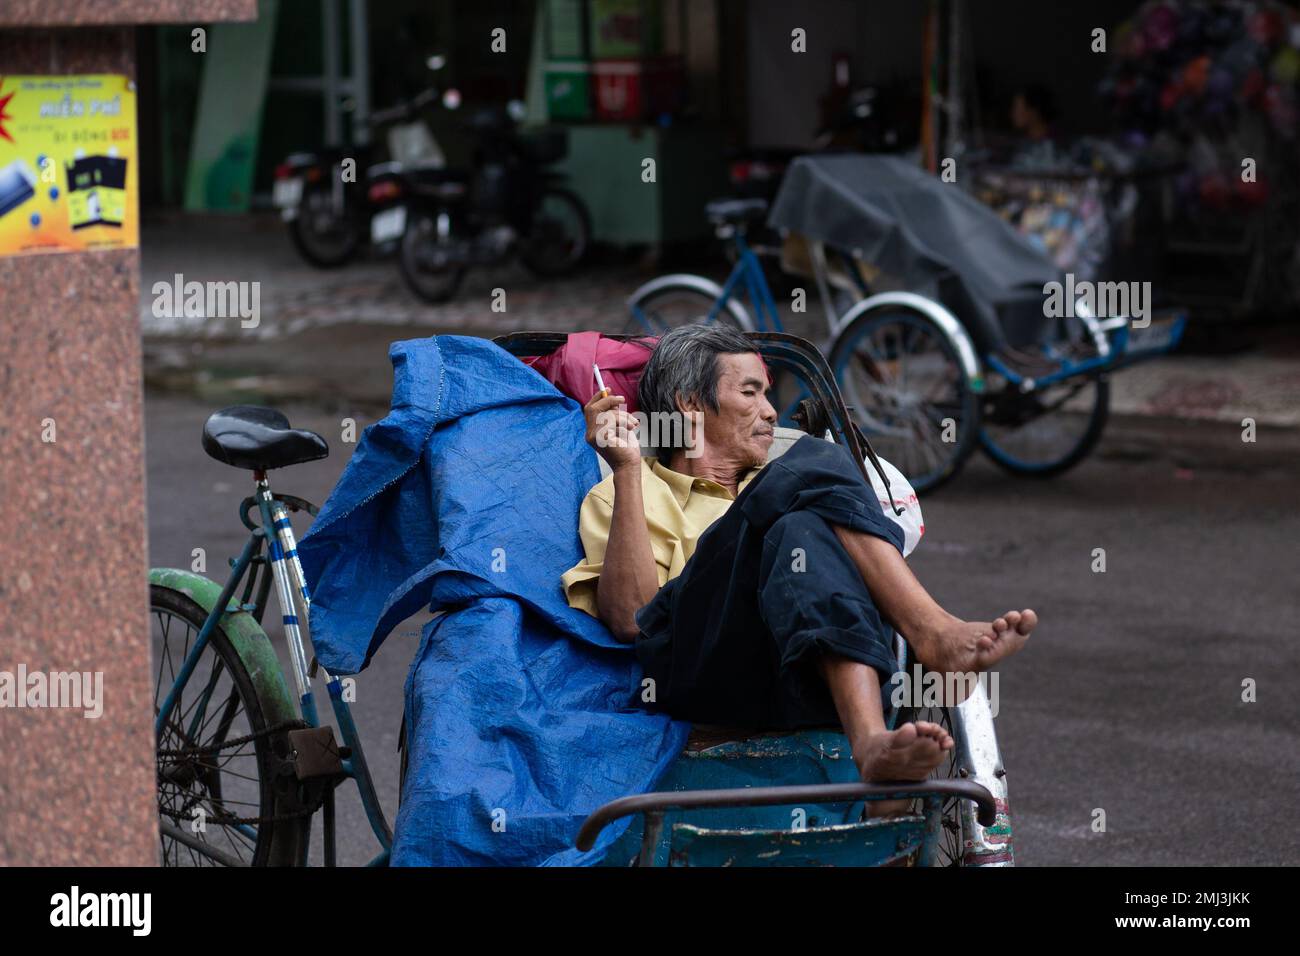 Uomo fumo sigaretta - Chung cư B Chợ Đầm - Vietnam blocchi di appartamenti intorno al mercato Dam ( Chợ Đầm ) Nha Trang Vietnam Foto Stock